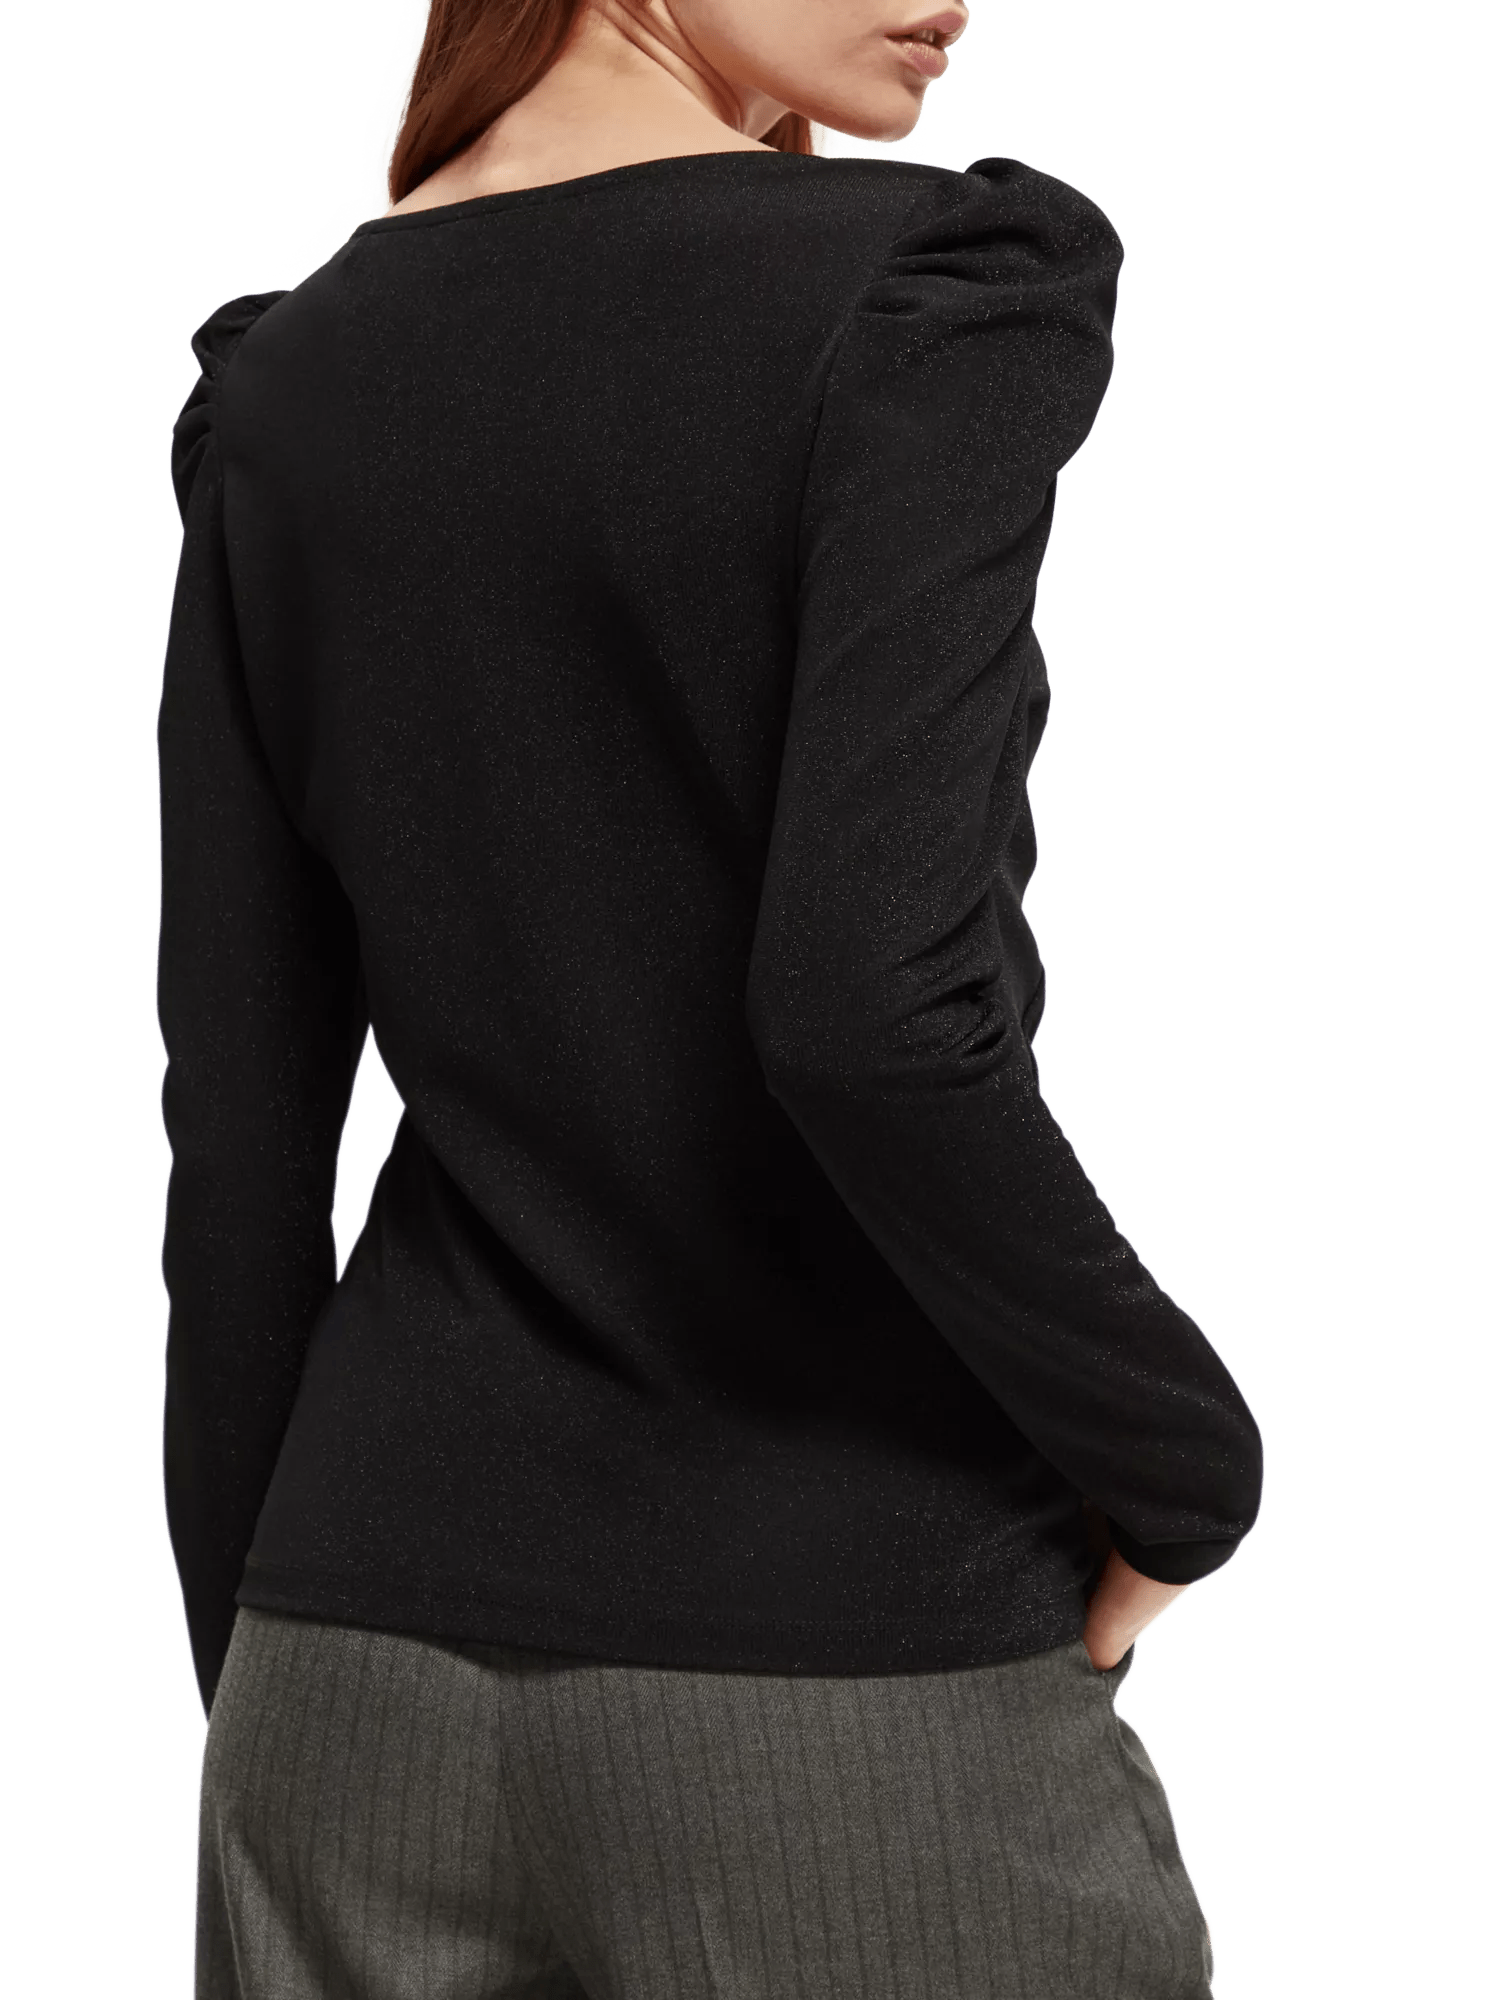 Twisted long-sleeved V-neck top